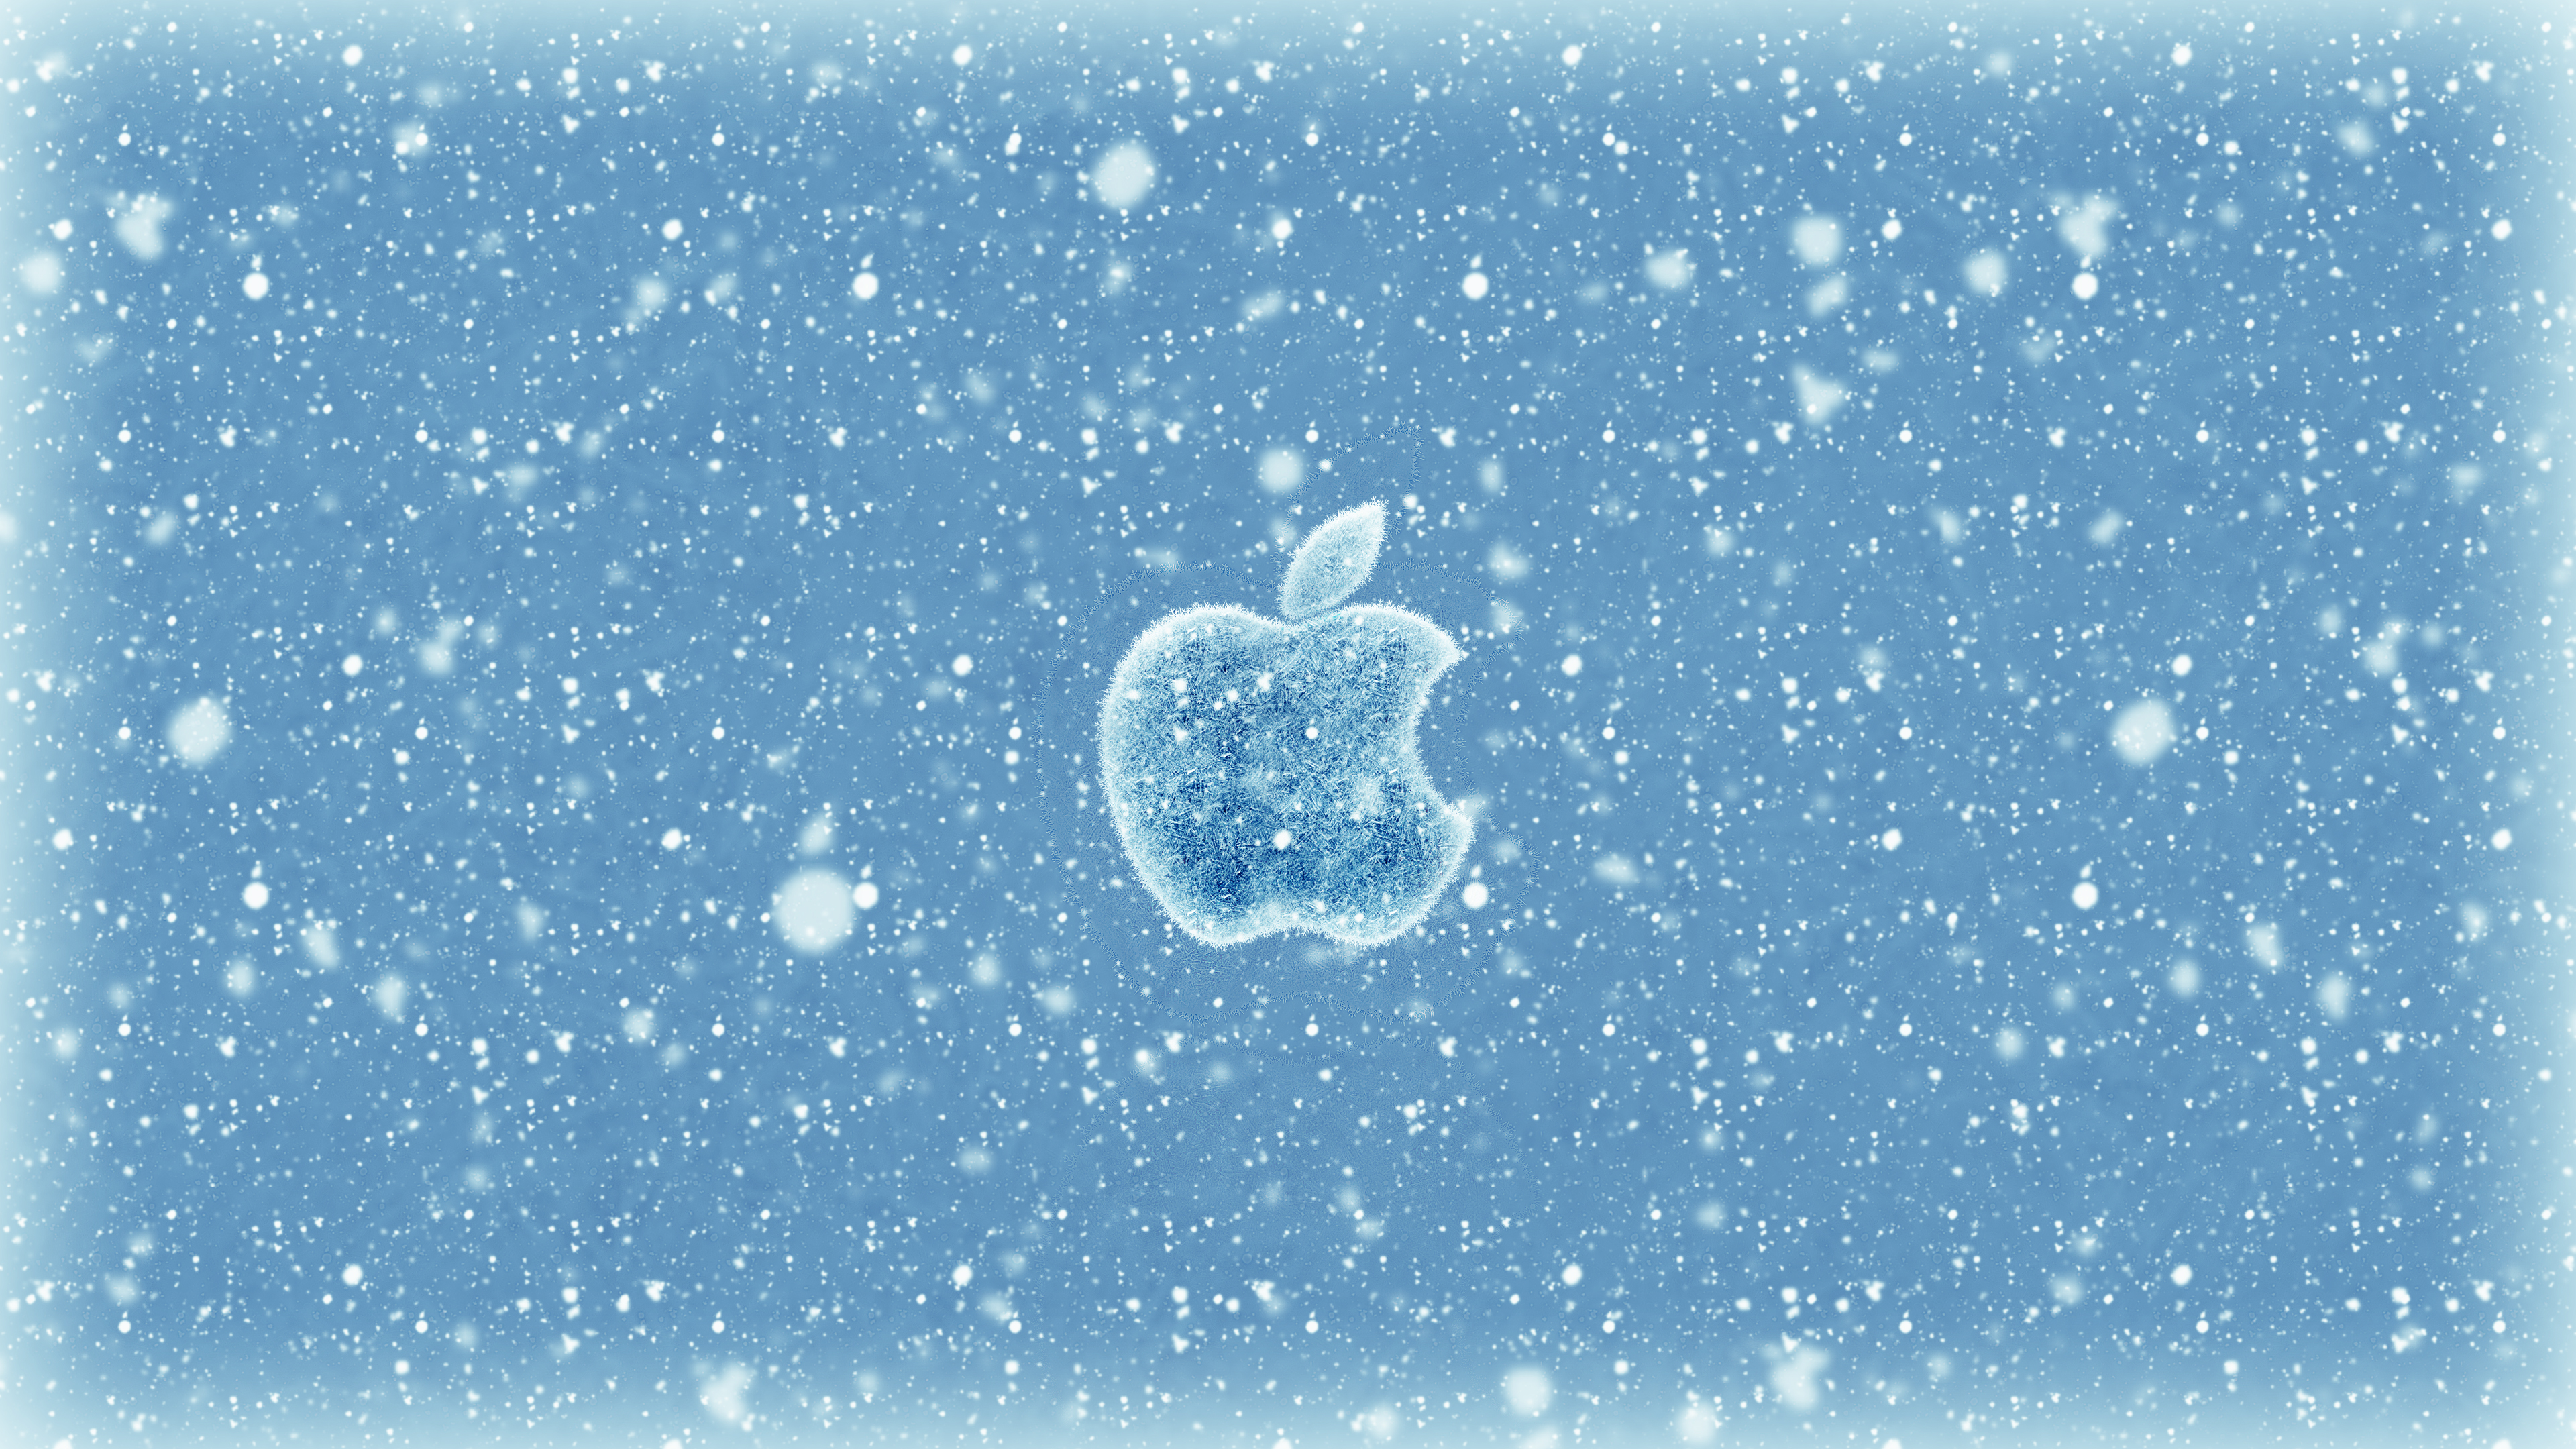 Handy-Wallpaper Technologie, Apfel, Logo, Apple Inc kostenlos herunterladen.